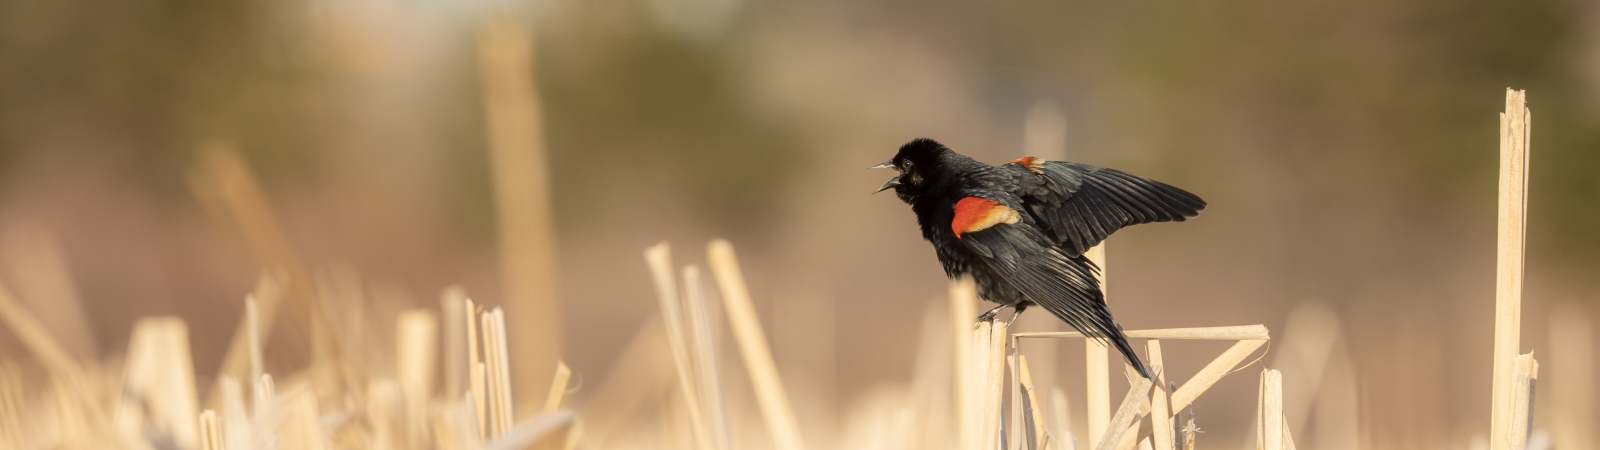 black bird sitting on stalk in field